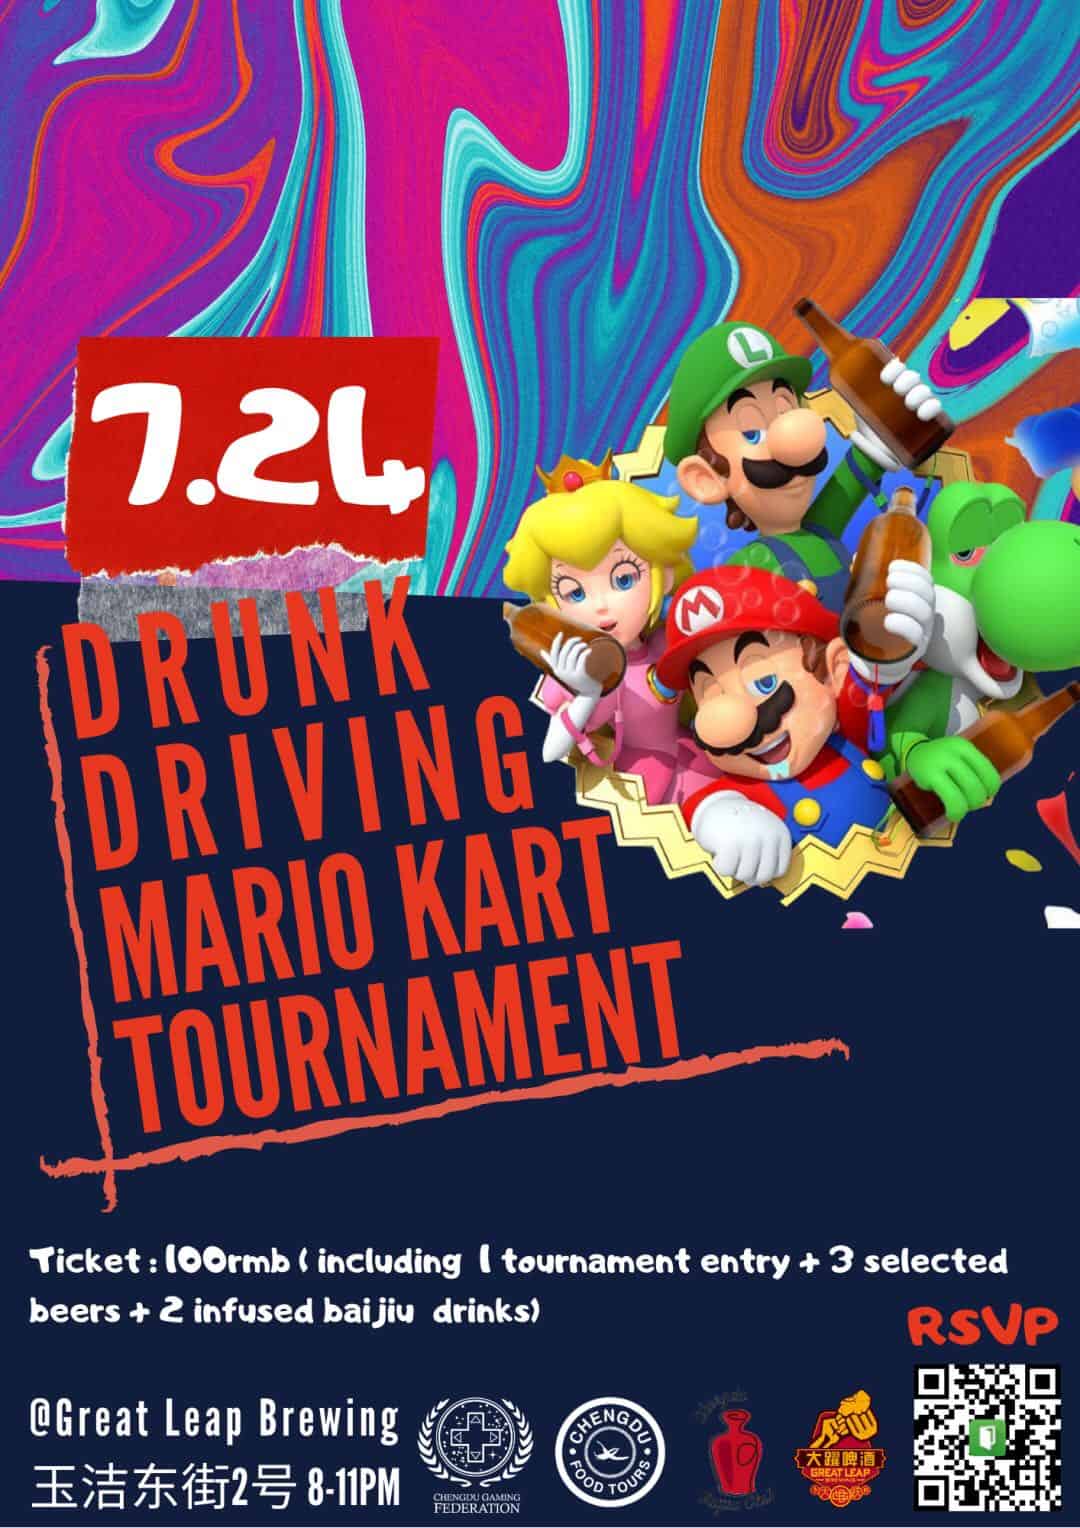 July 24 Drunk Driving Mario Kart Tournament chengdu expat 1